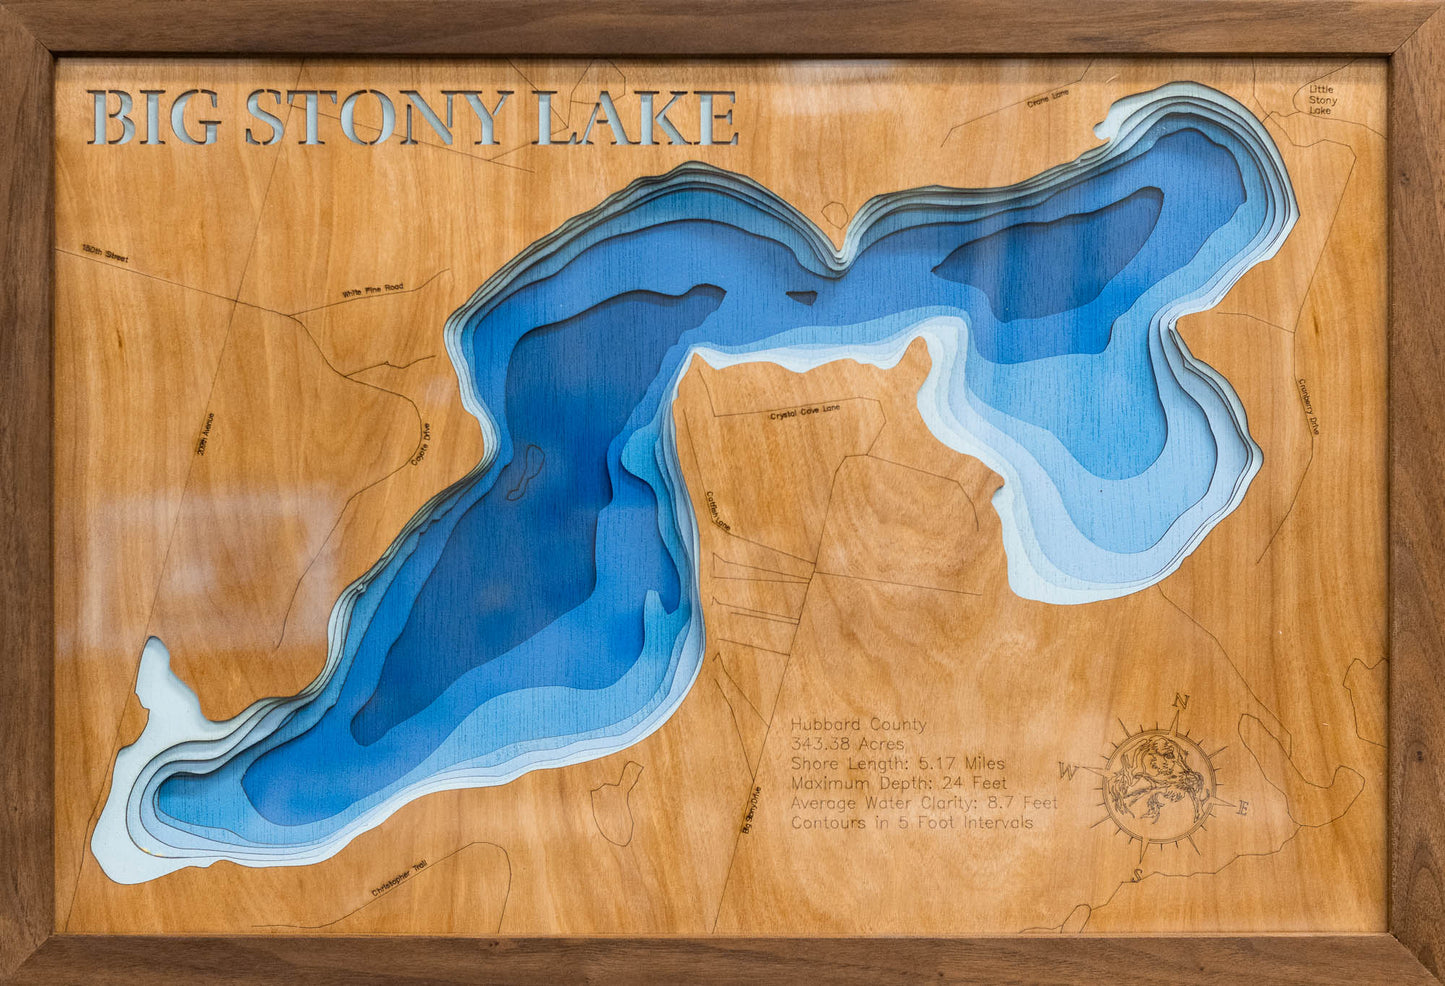 Big Stony Lake in Hubbard County, MN